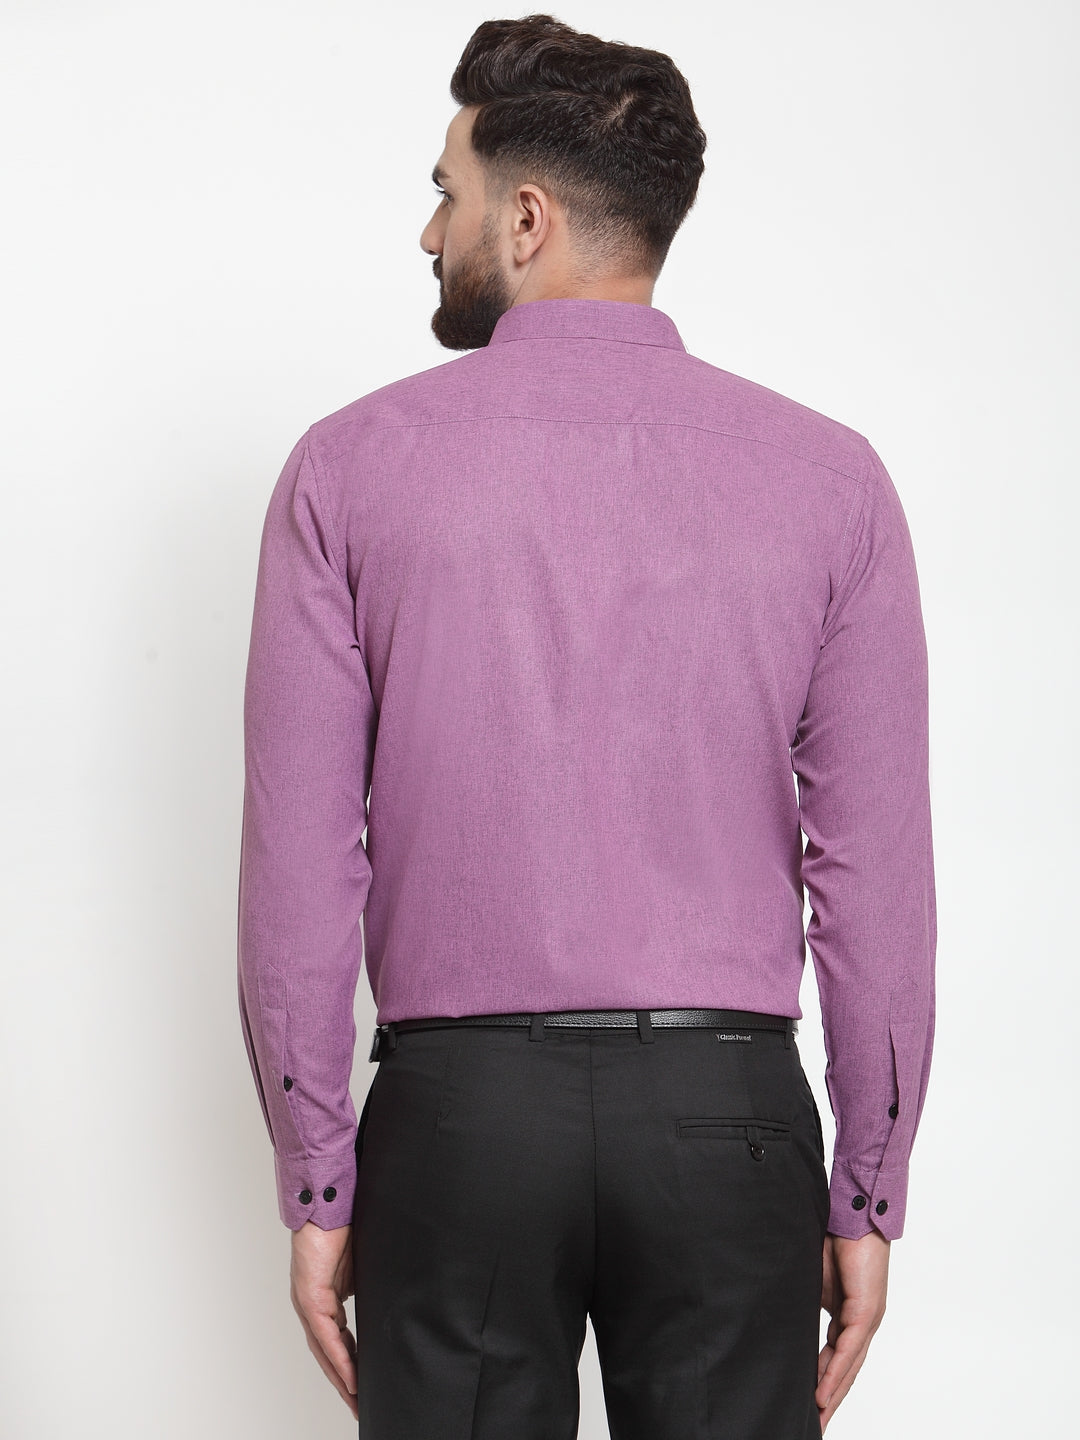 Jainish Purple Men's Cotton Solid Button Down Formal Shirts